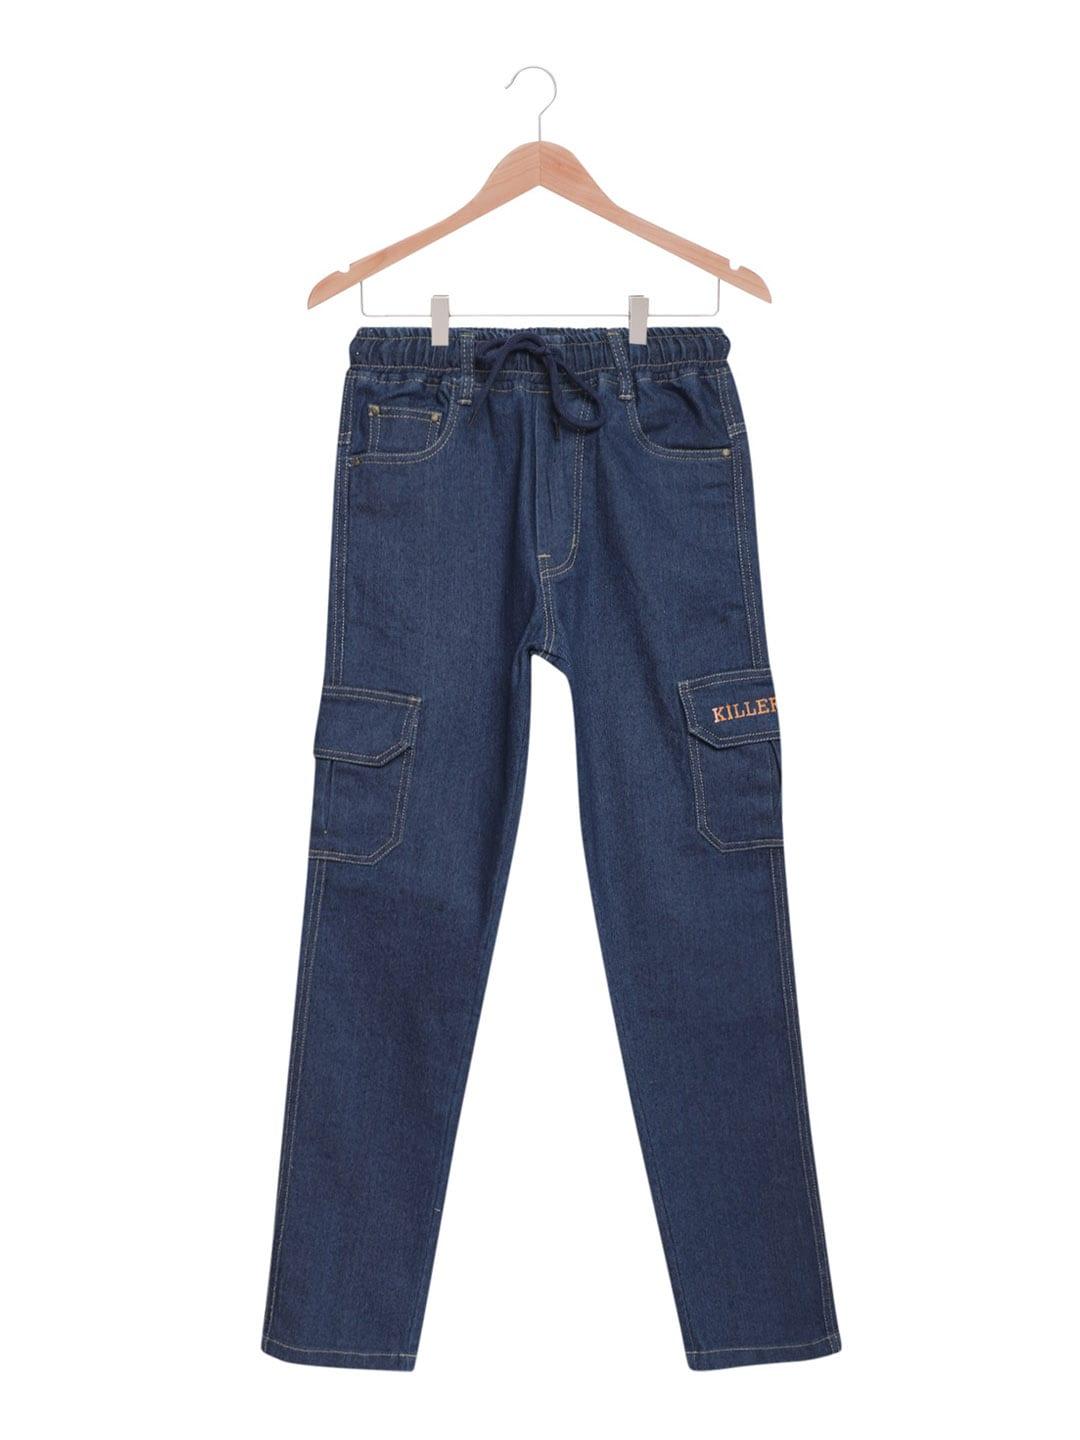 Killer Boys Mid-Rise Stretchable Cotton Jeans